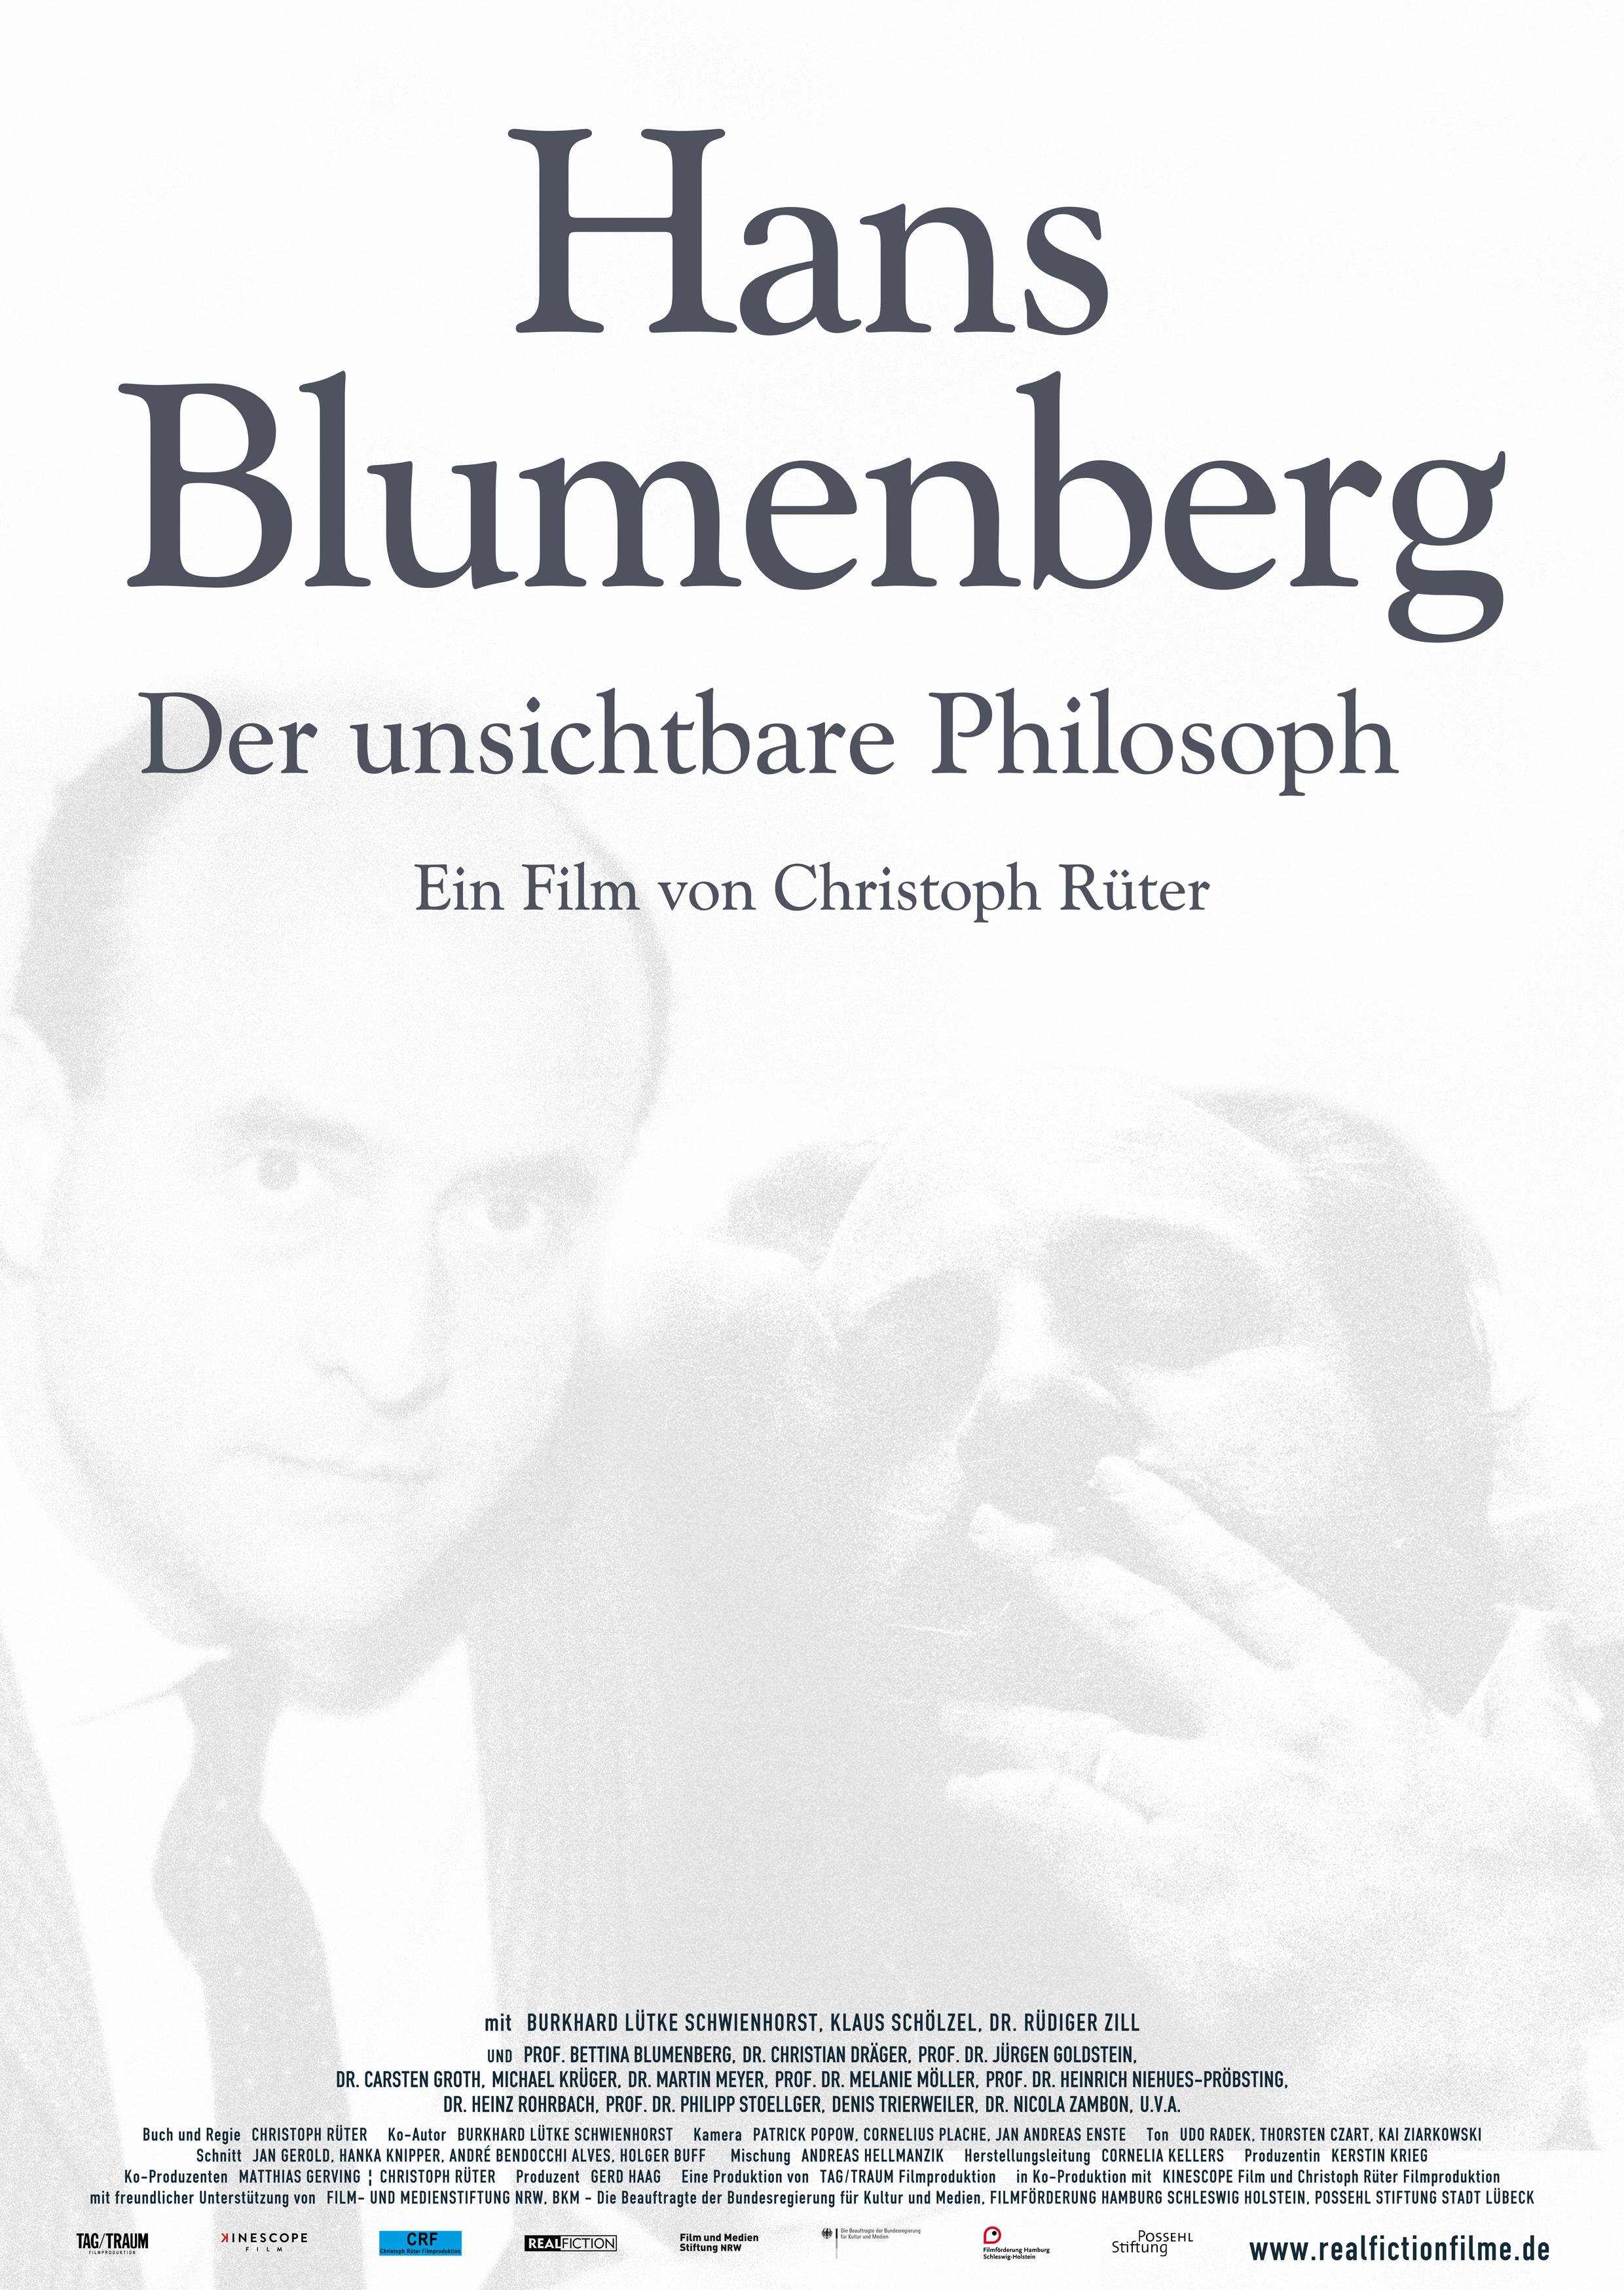 blumenberg-01.jpg